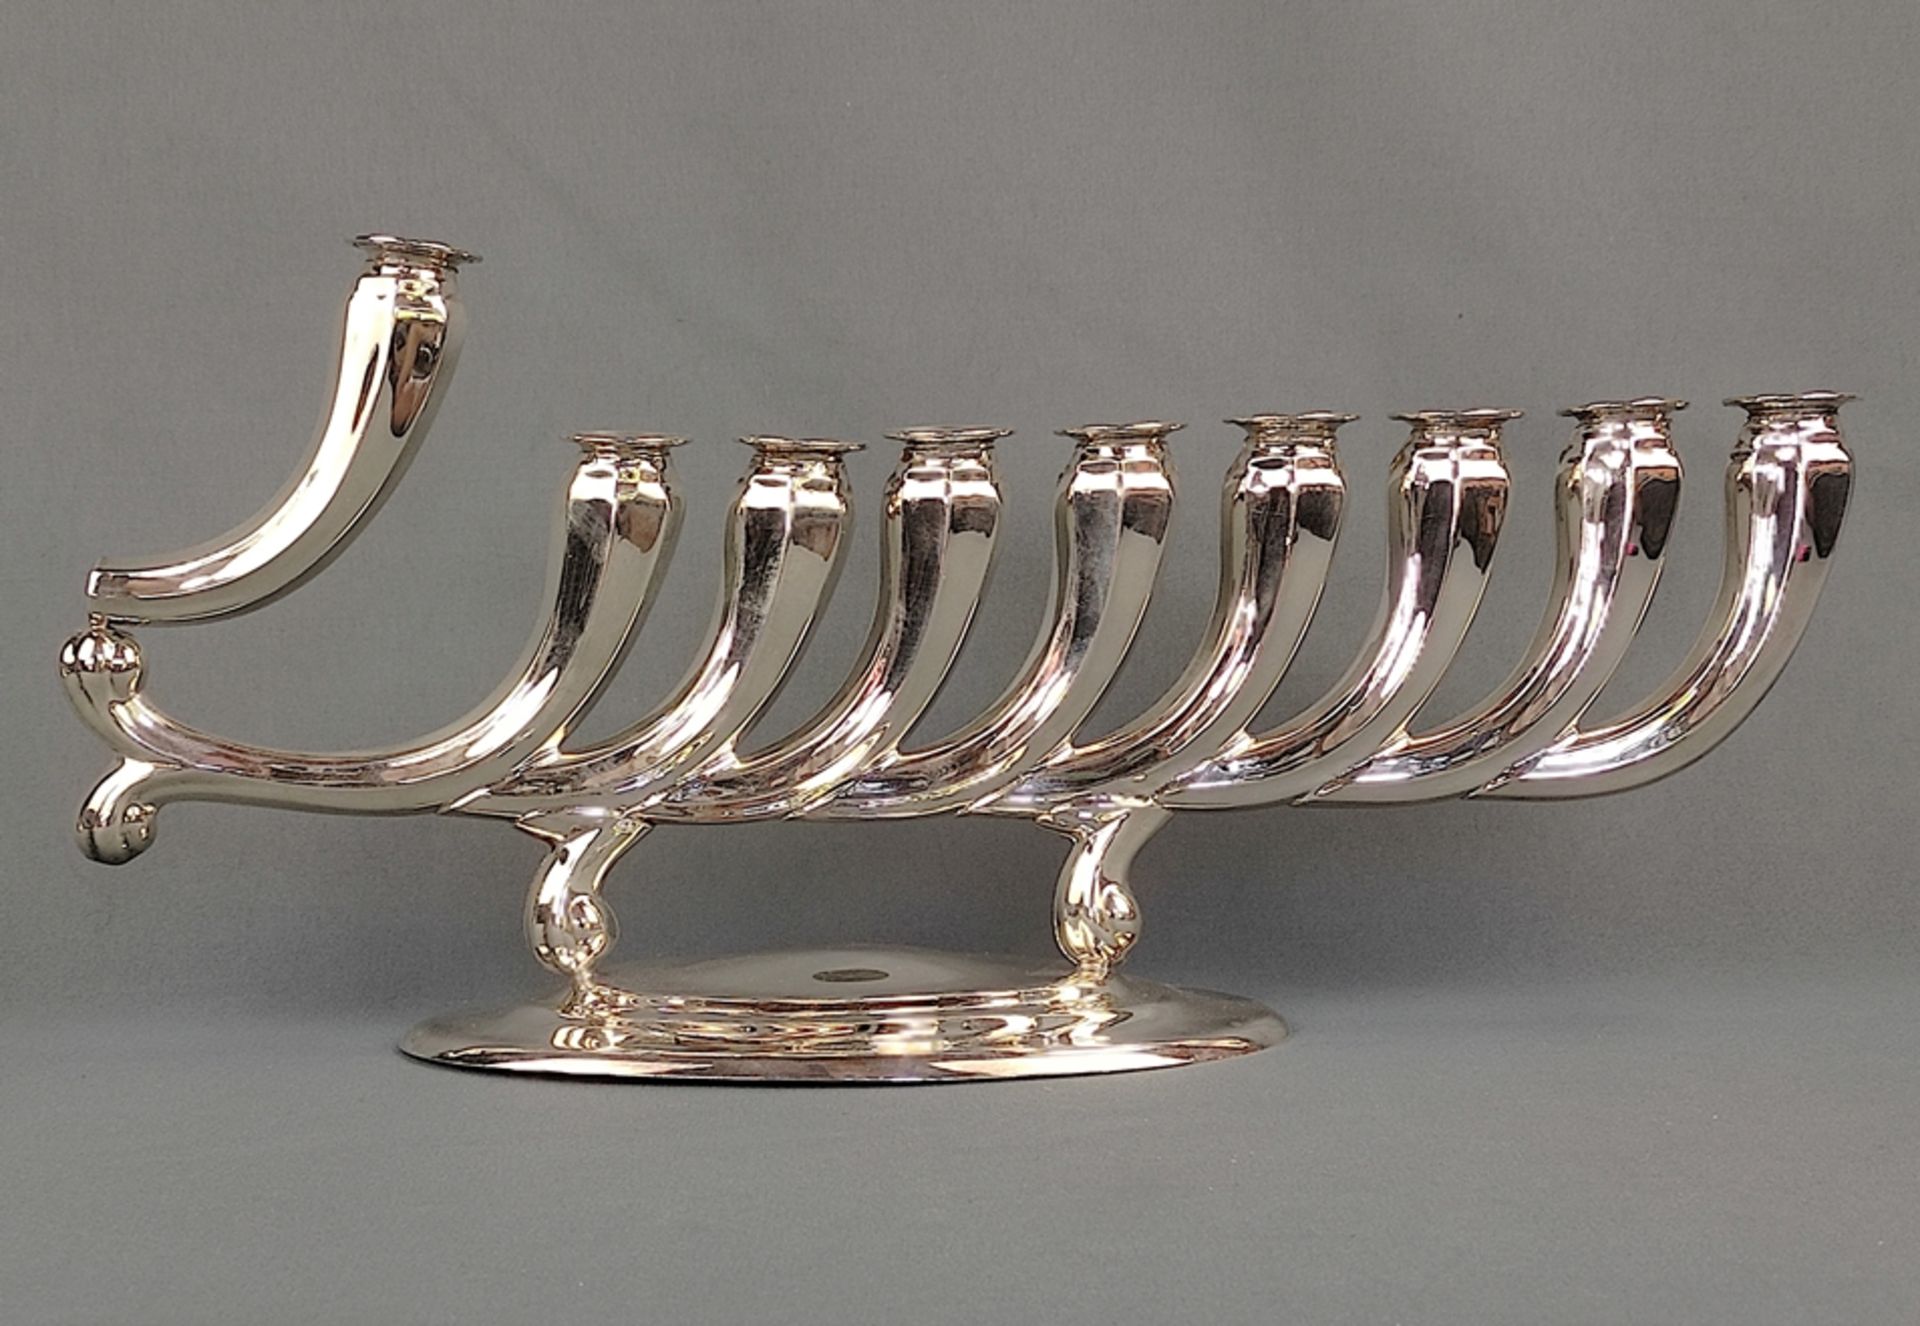 Modern Hanukkah candlestick, with 8 light holders and one servant, 925 silver, 546g, Hazorfim, Isra